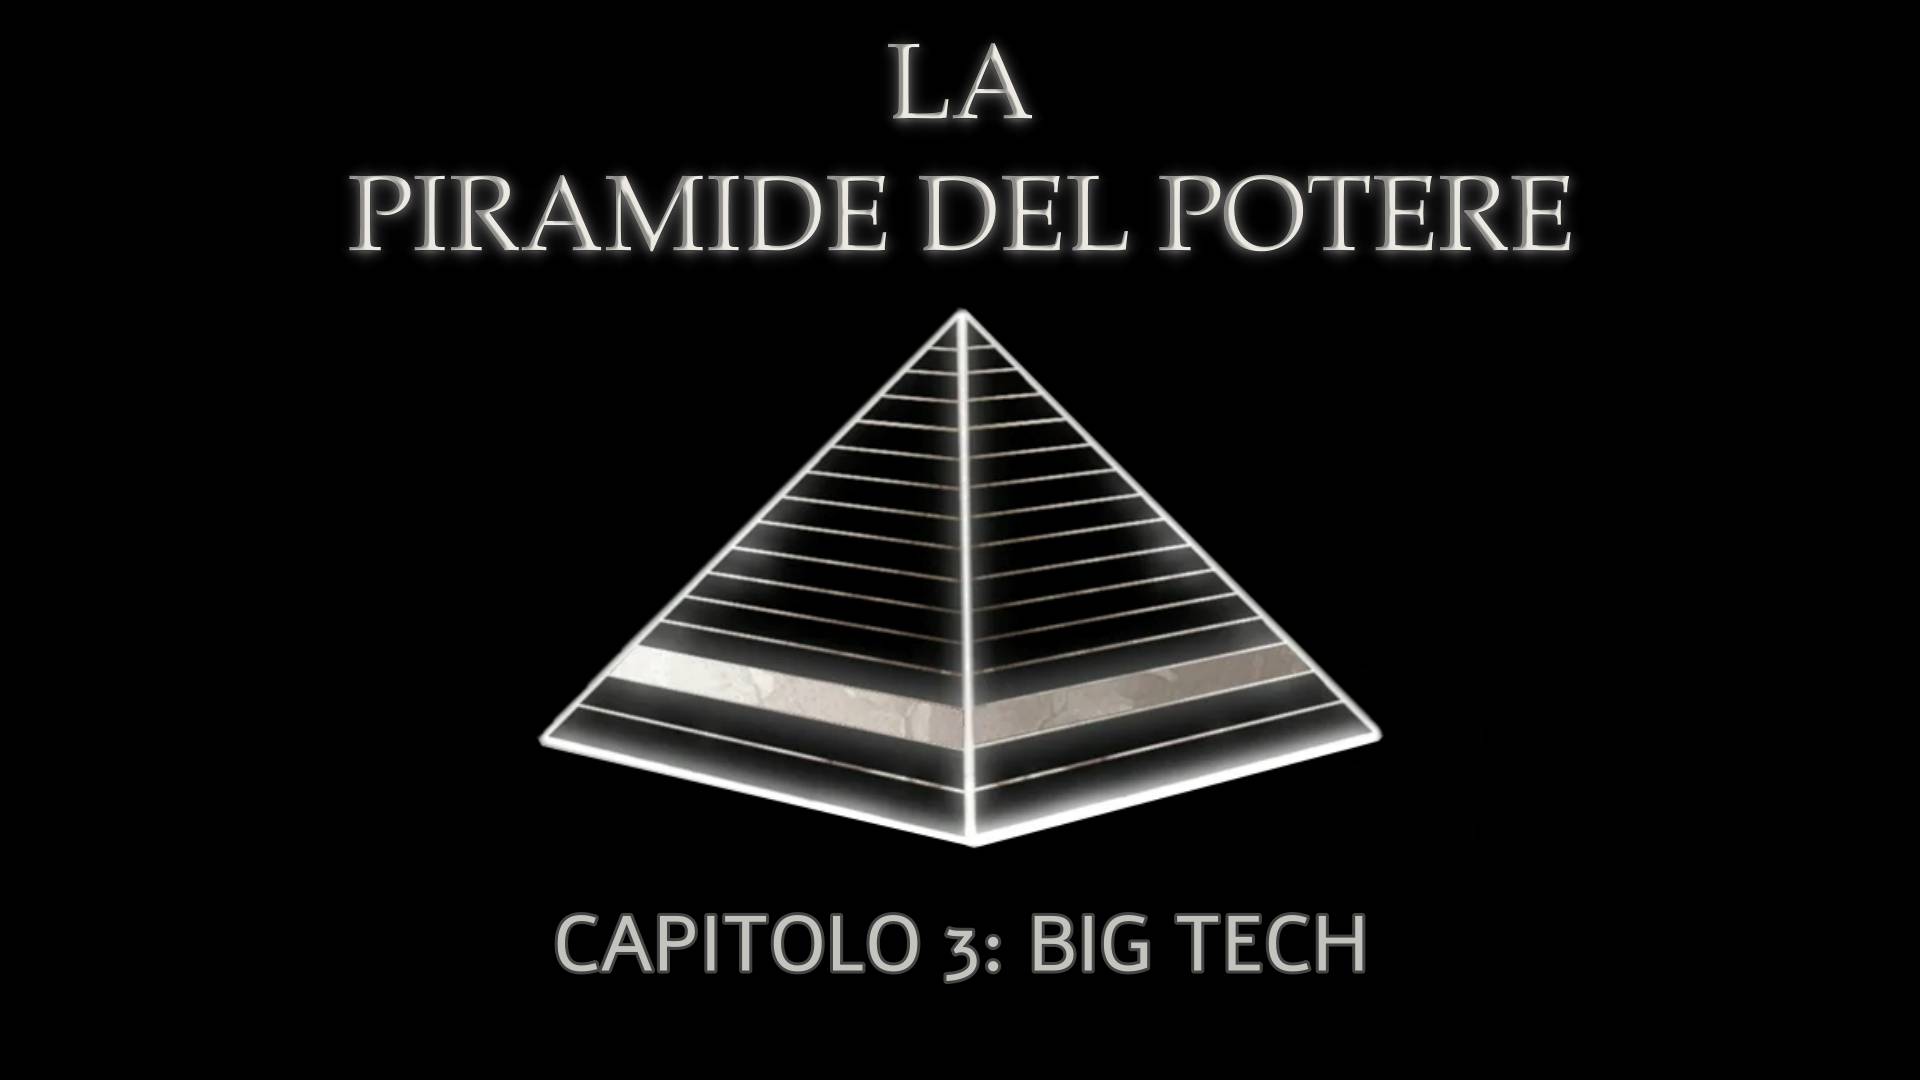 La Piramide del Potere – Capitolo 3: Big Tech